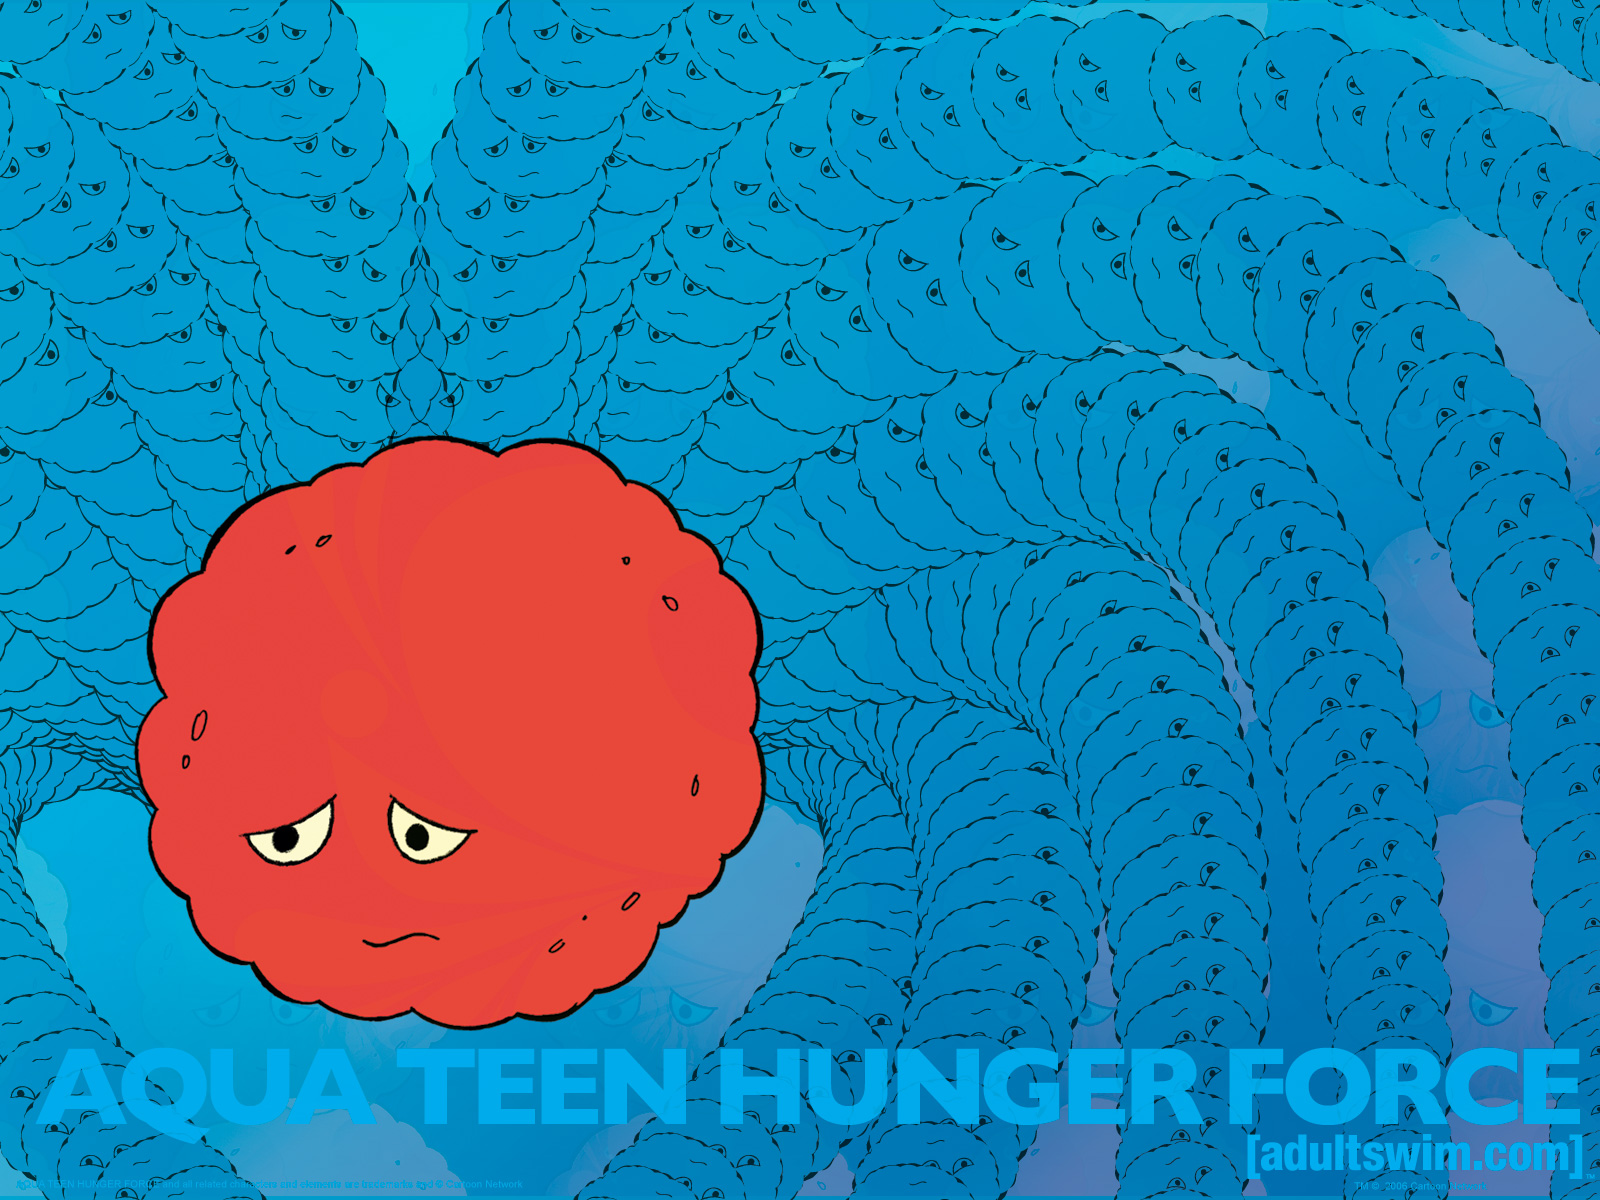 TV Show Aqua Teen Hunger Force HD Wallpaper | Background Image